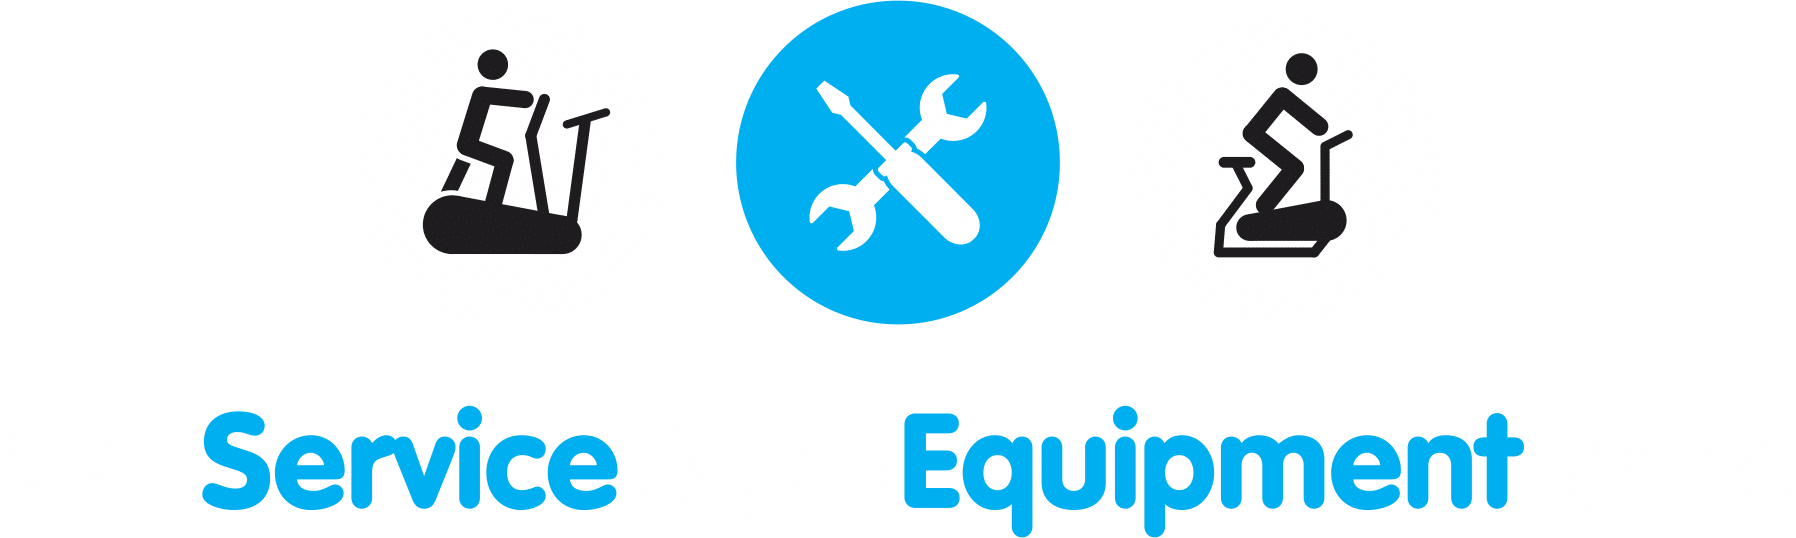 We Buy Gym Equipment